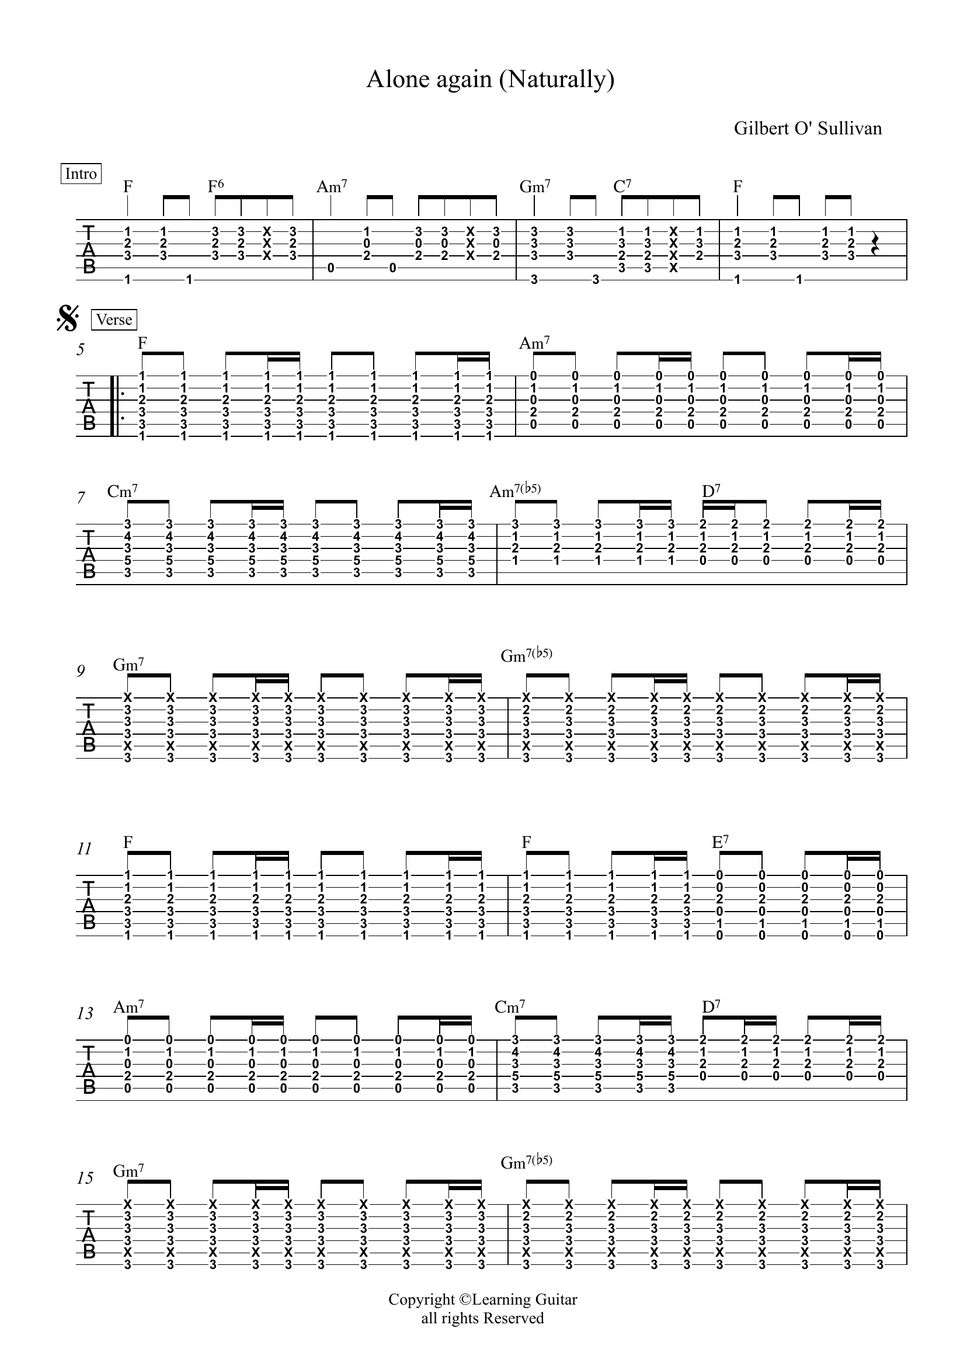 Gilbert O' sullivan - Alone again (Naturally) Guitar Rhythm (Chords) TAB  Sheets